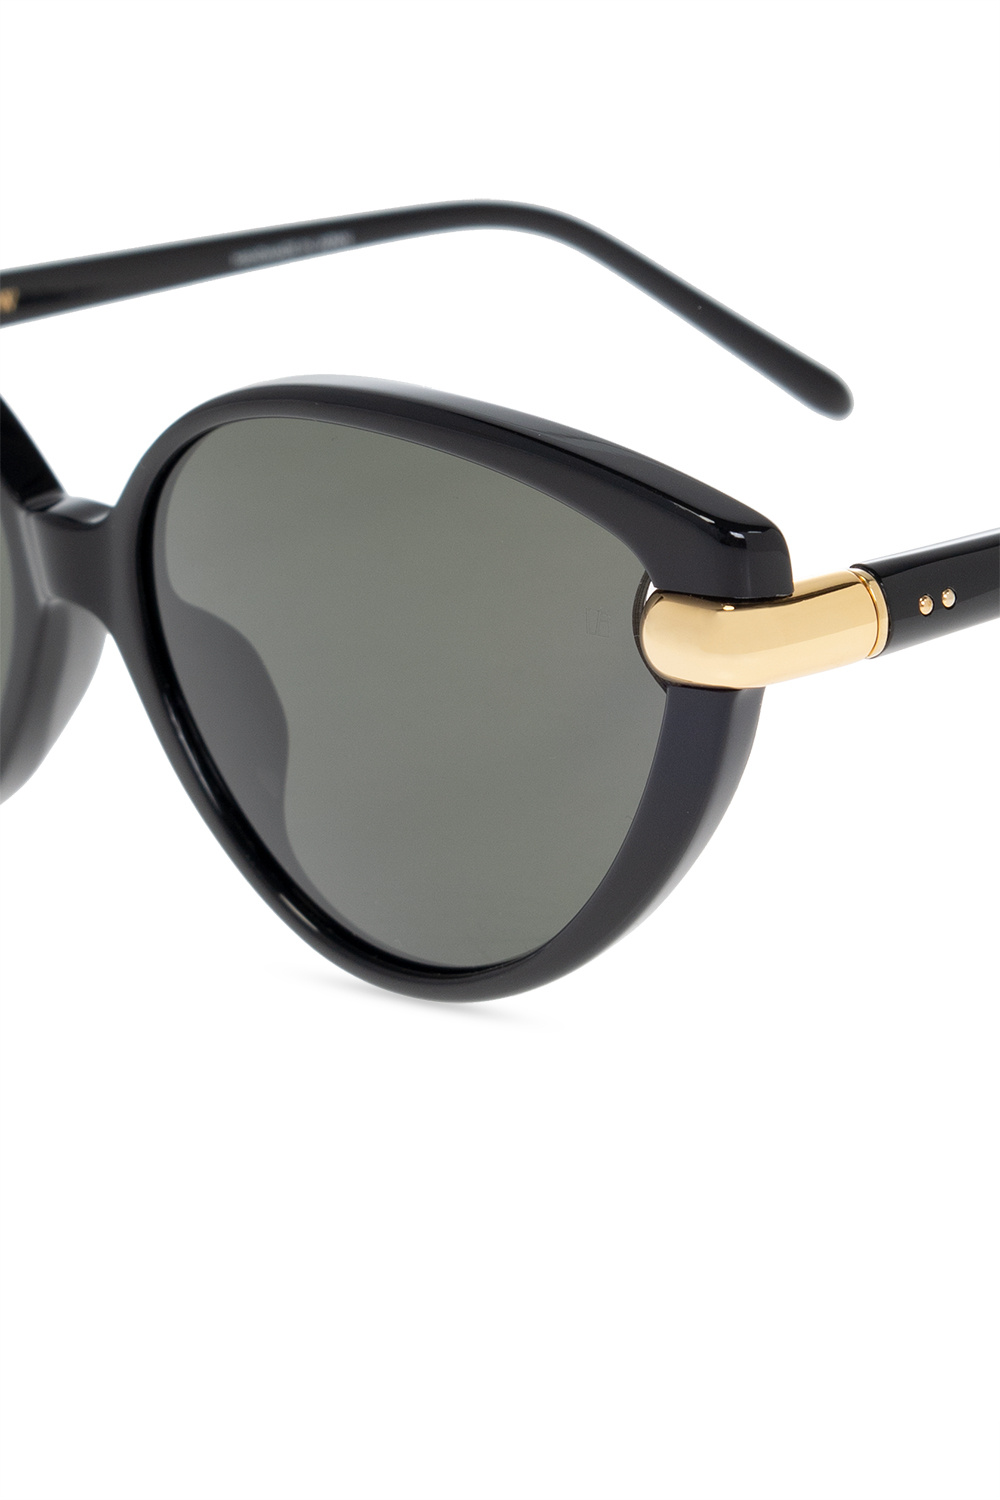 Linda Farrow ‘Palm’ sunglasses